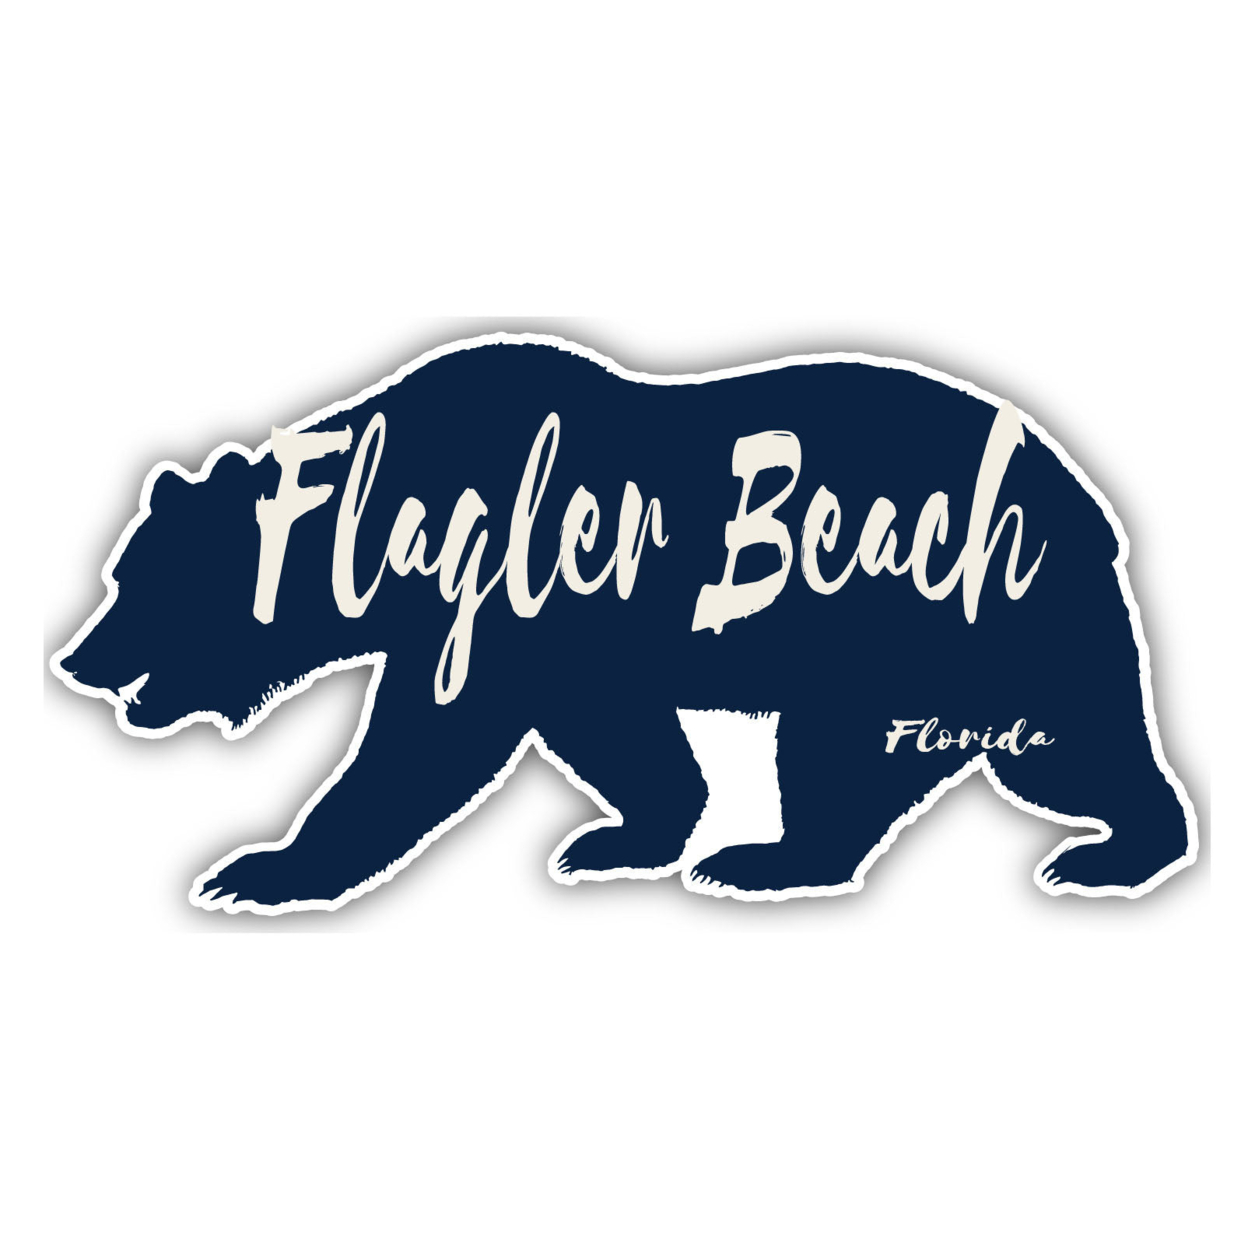 Flagler Beach Florida Souvenir Decorative Stickers (Choose Theme And Size) - Single Unit, 12-Inch, Camp Life